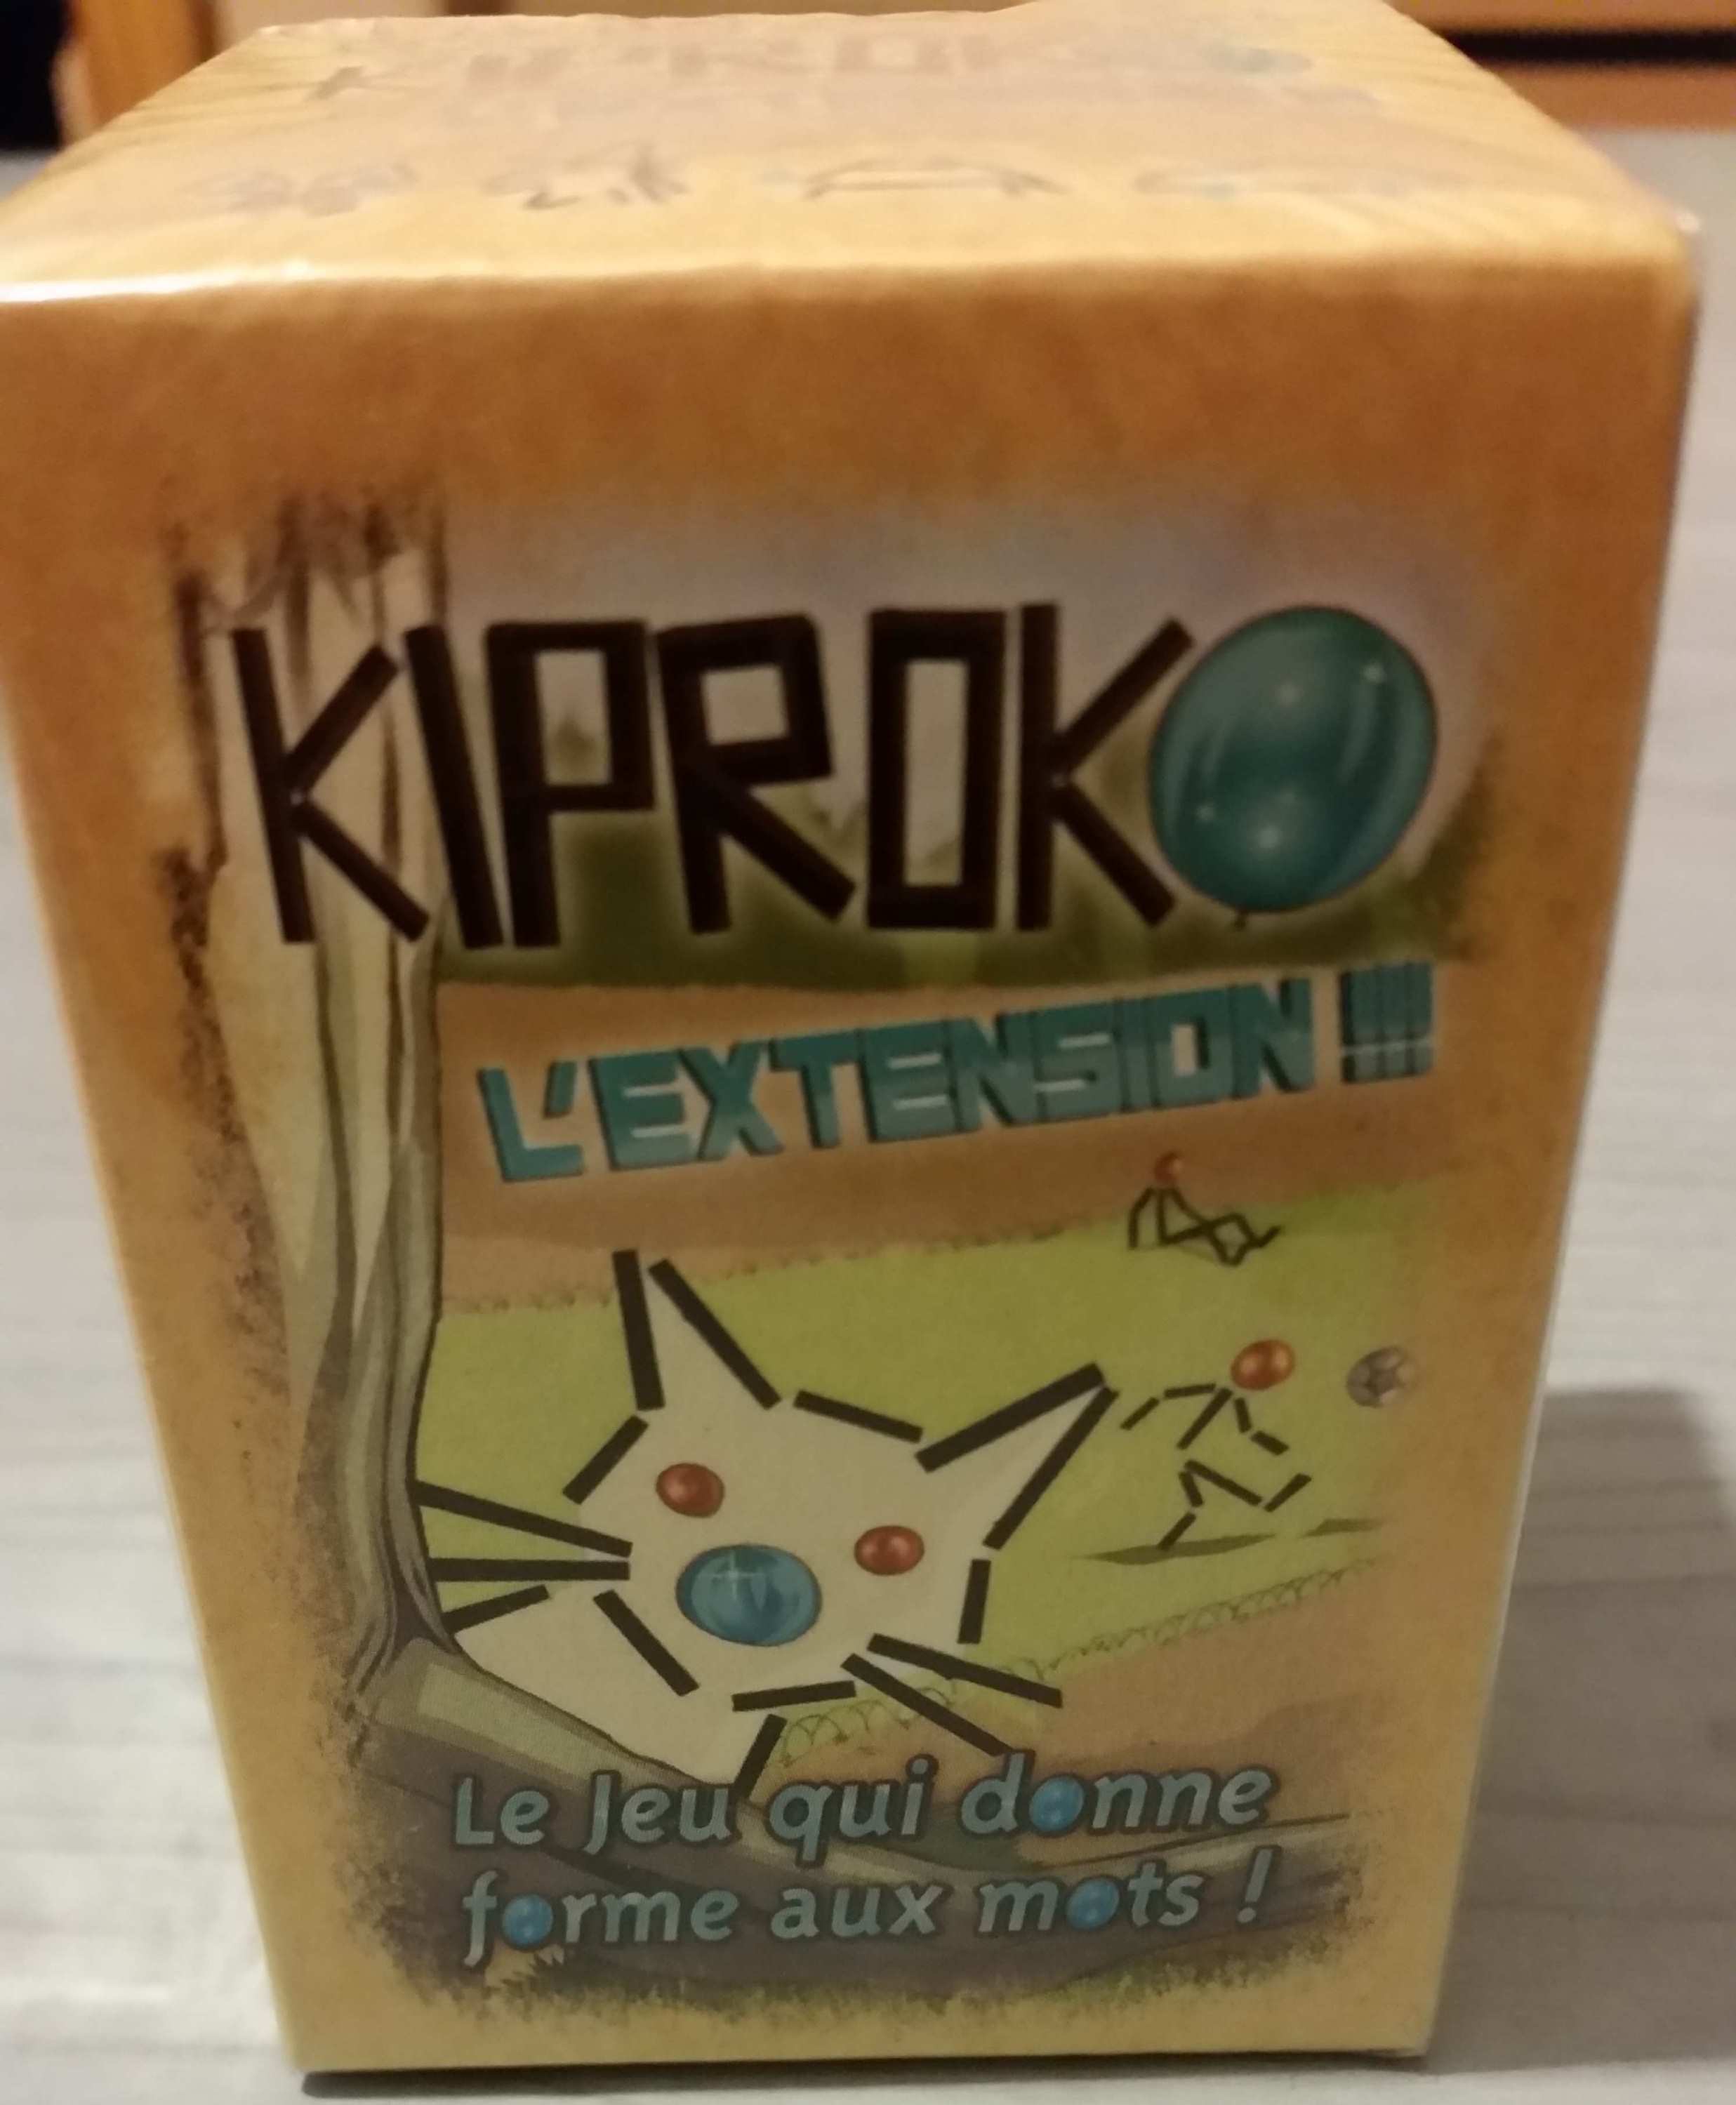 KIPROKO - L'Extension